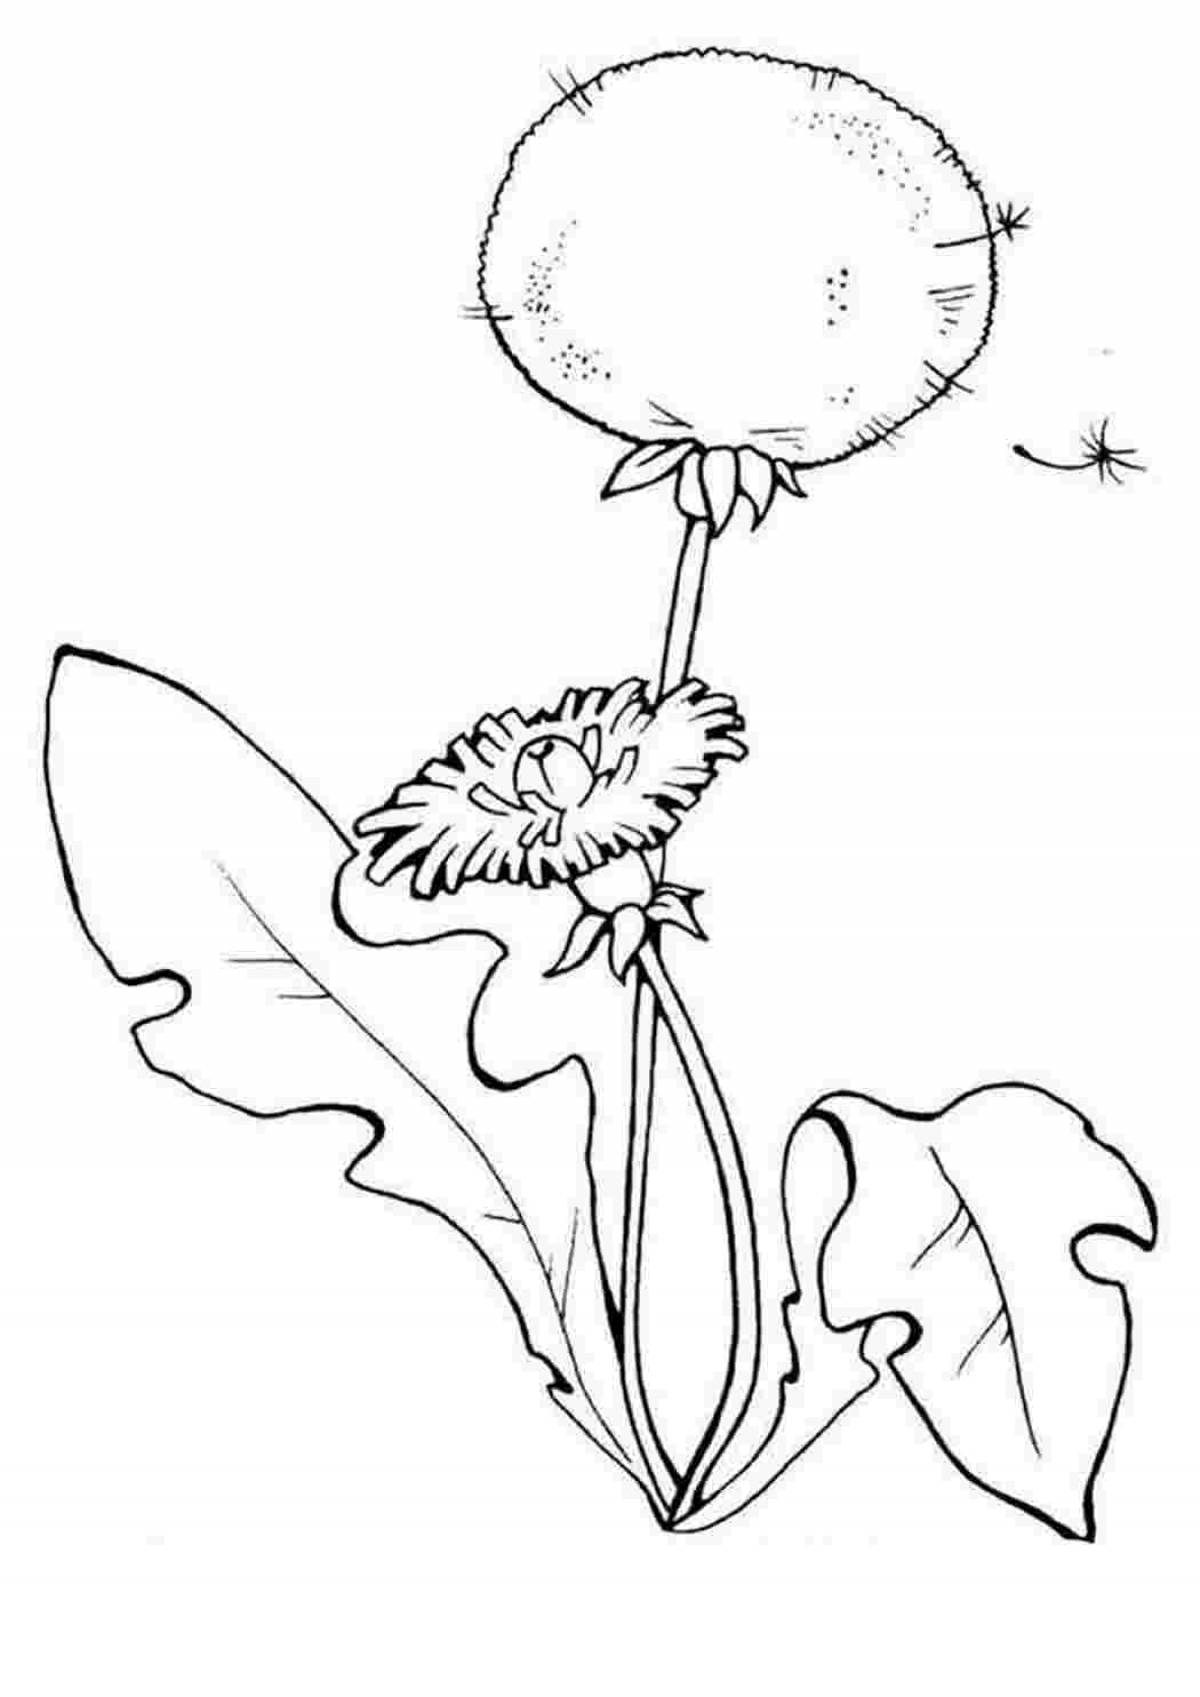 Dandelion beetle #14